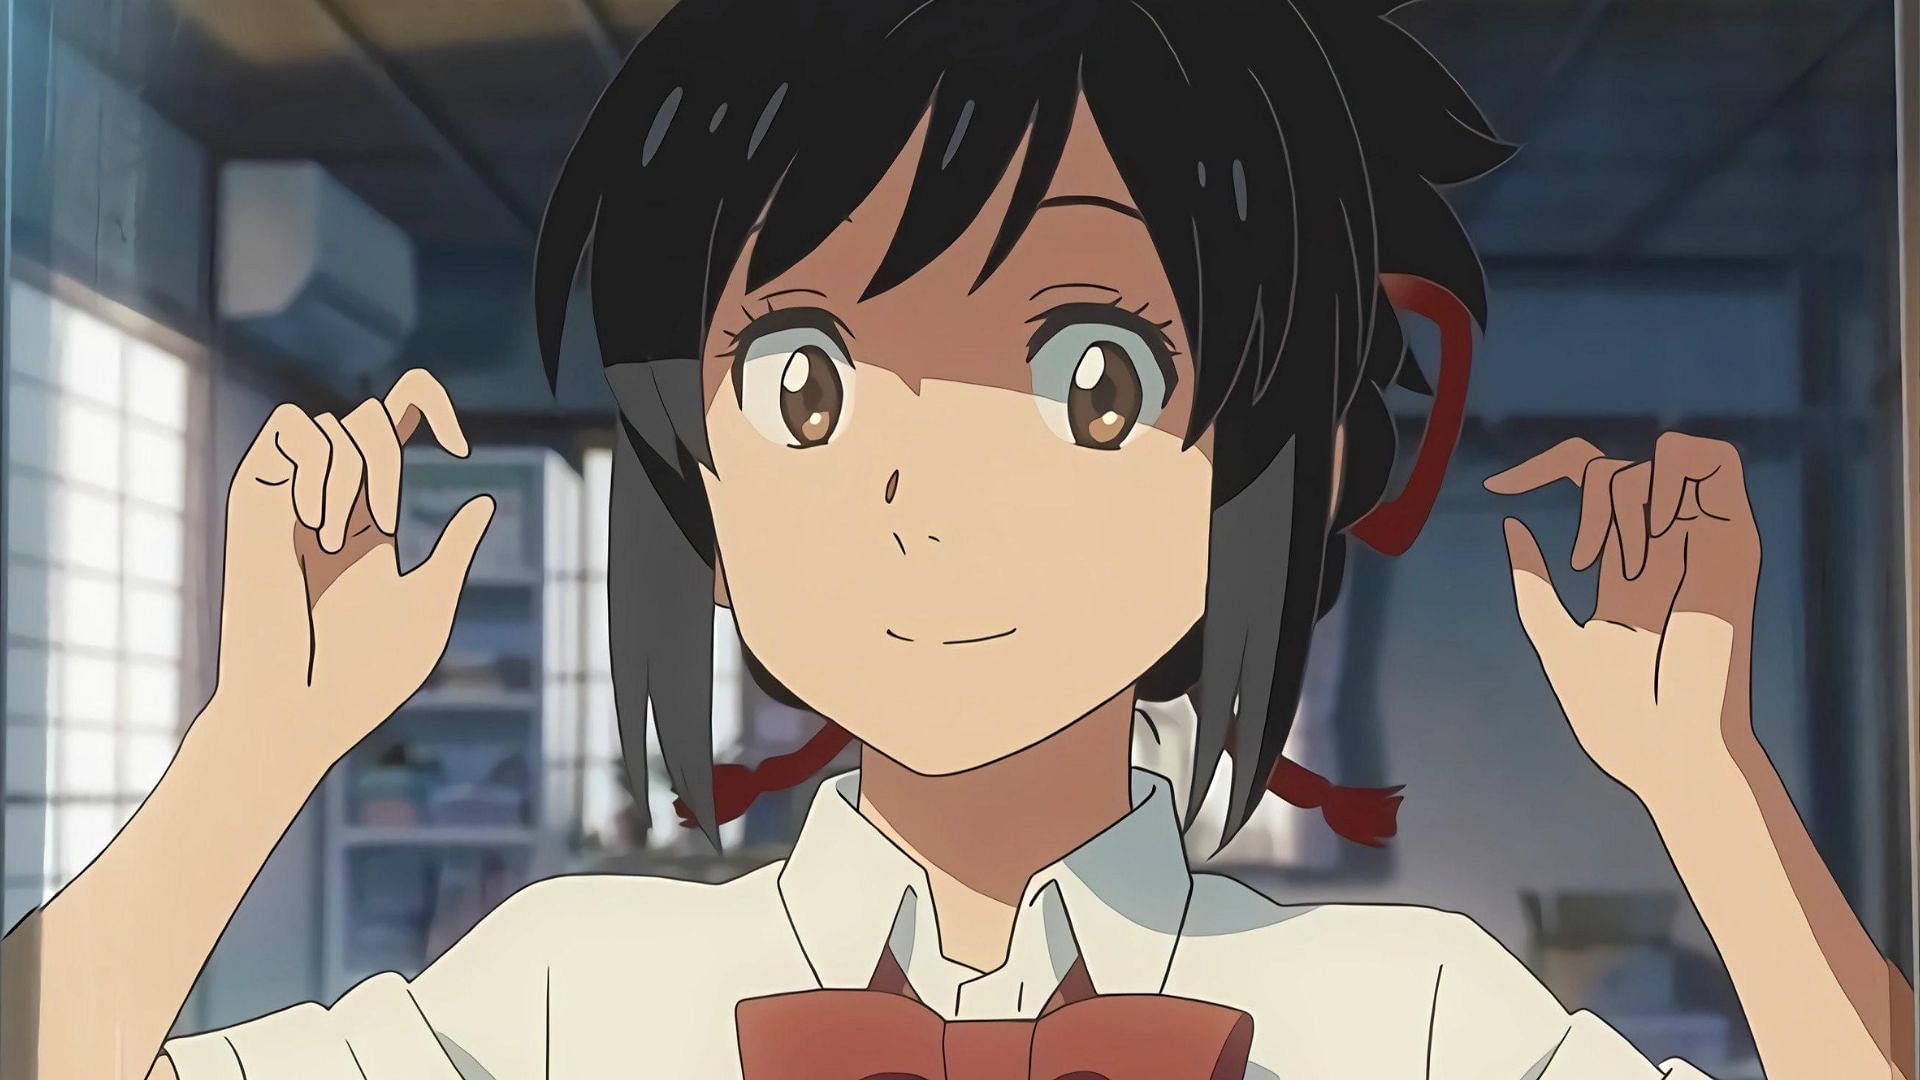 Mitsuha Miyamizu as seen in the anime (Image via CoMix Wave Films)